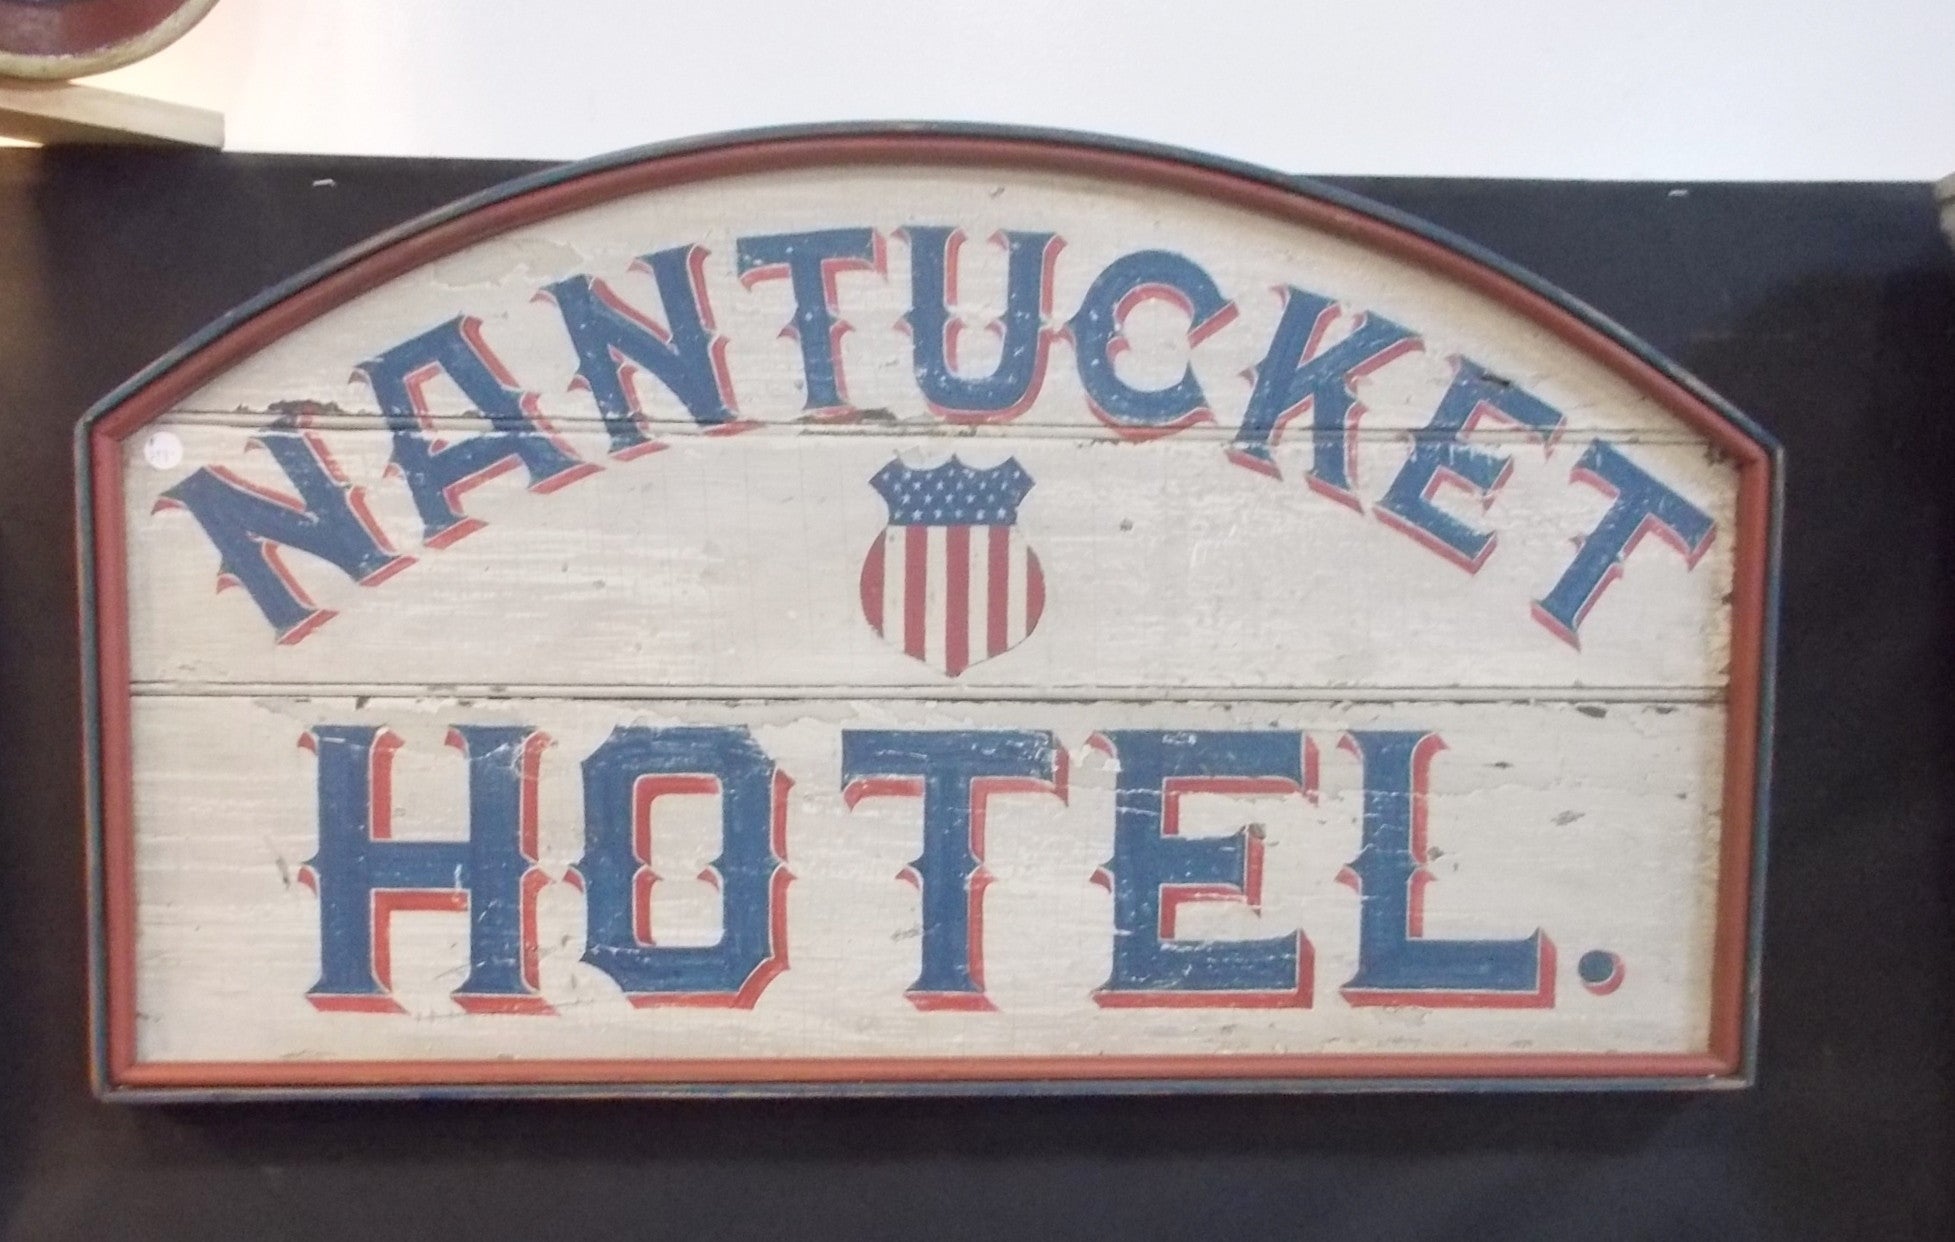 Nantucket Hotel